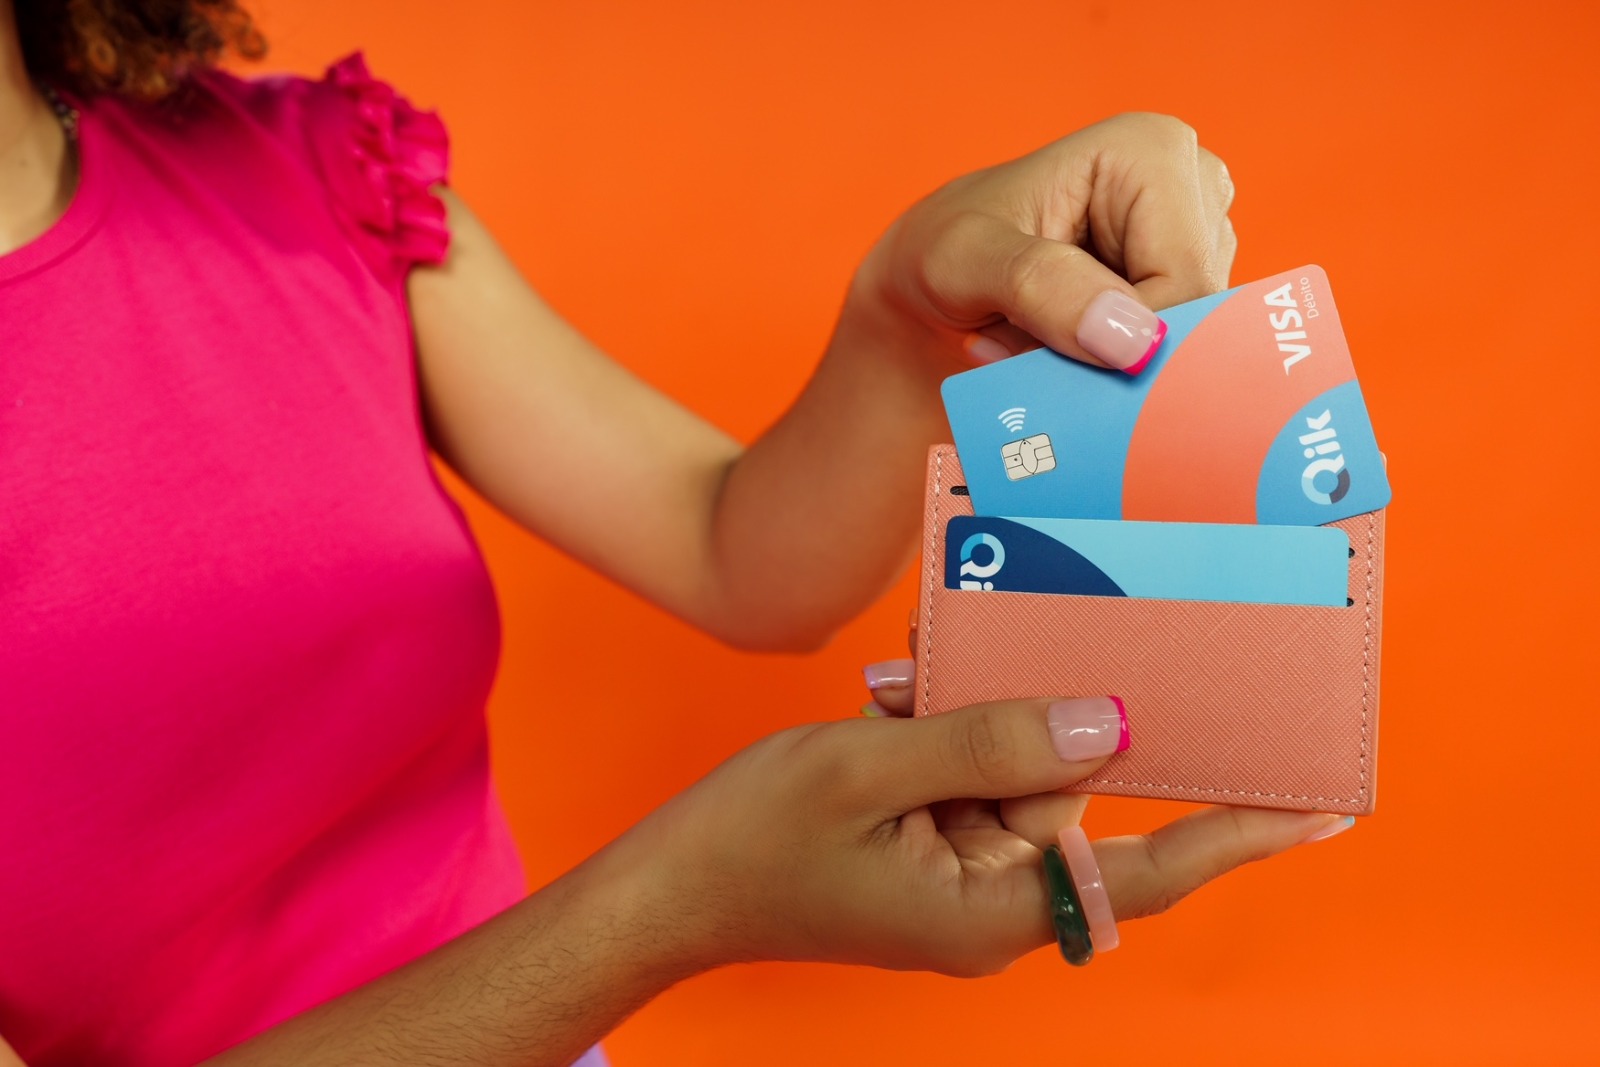 Qik Banco Digital lanza su tarjeta de débito Visa